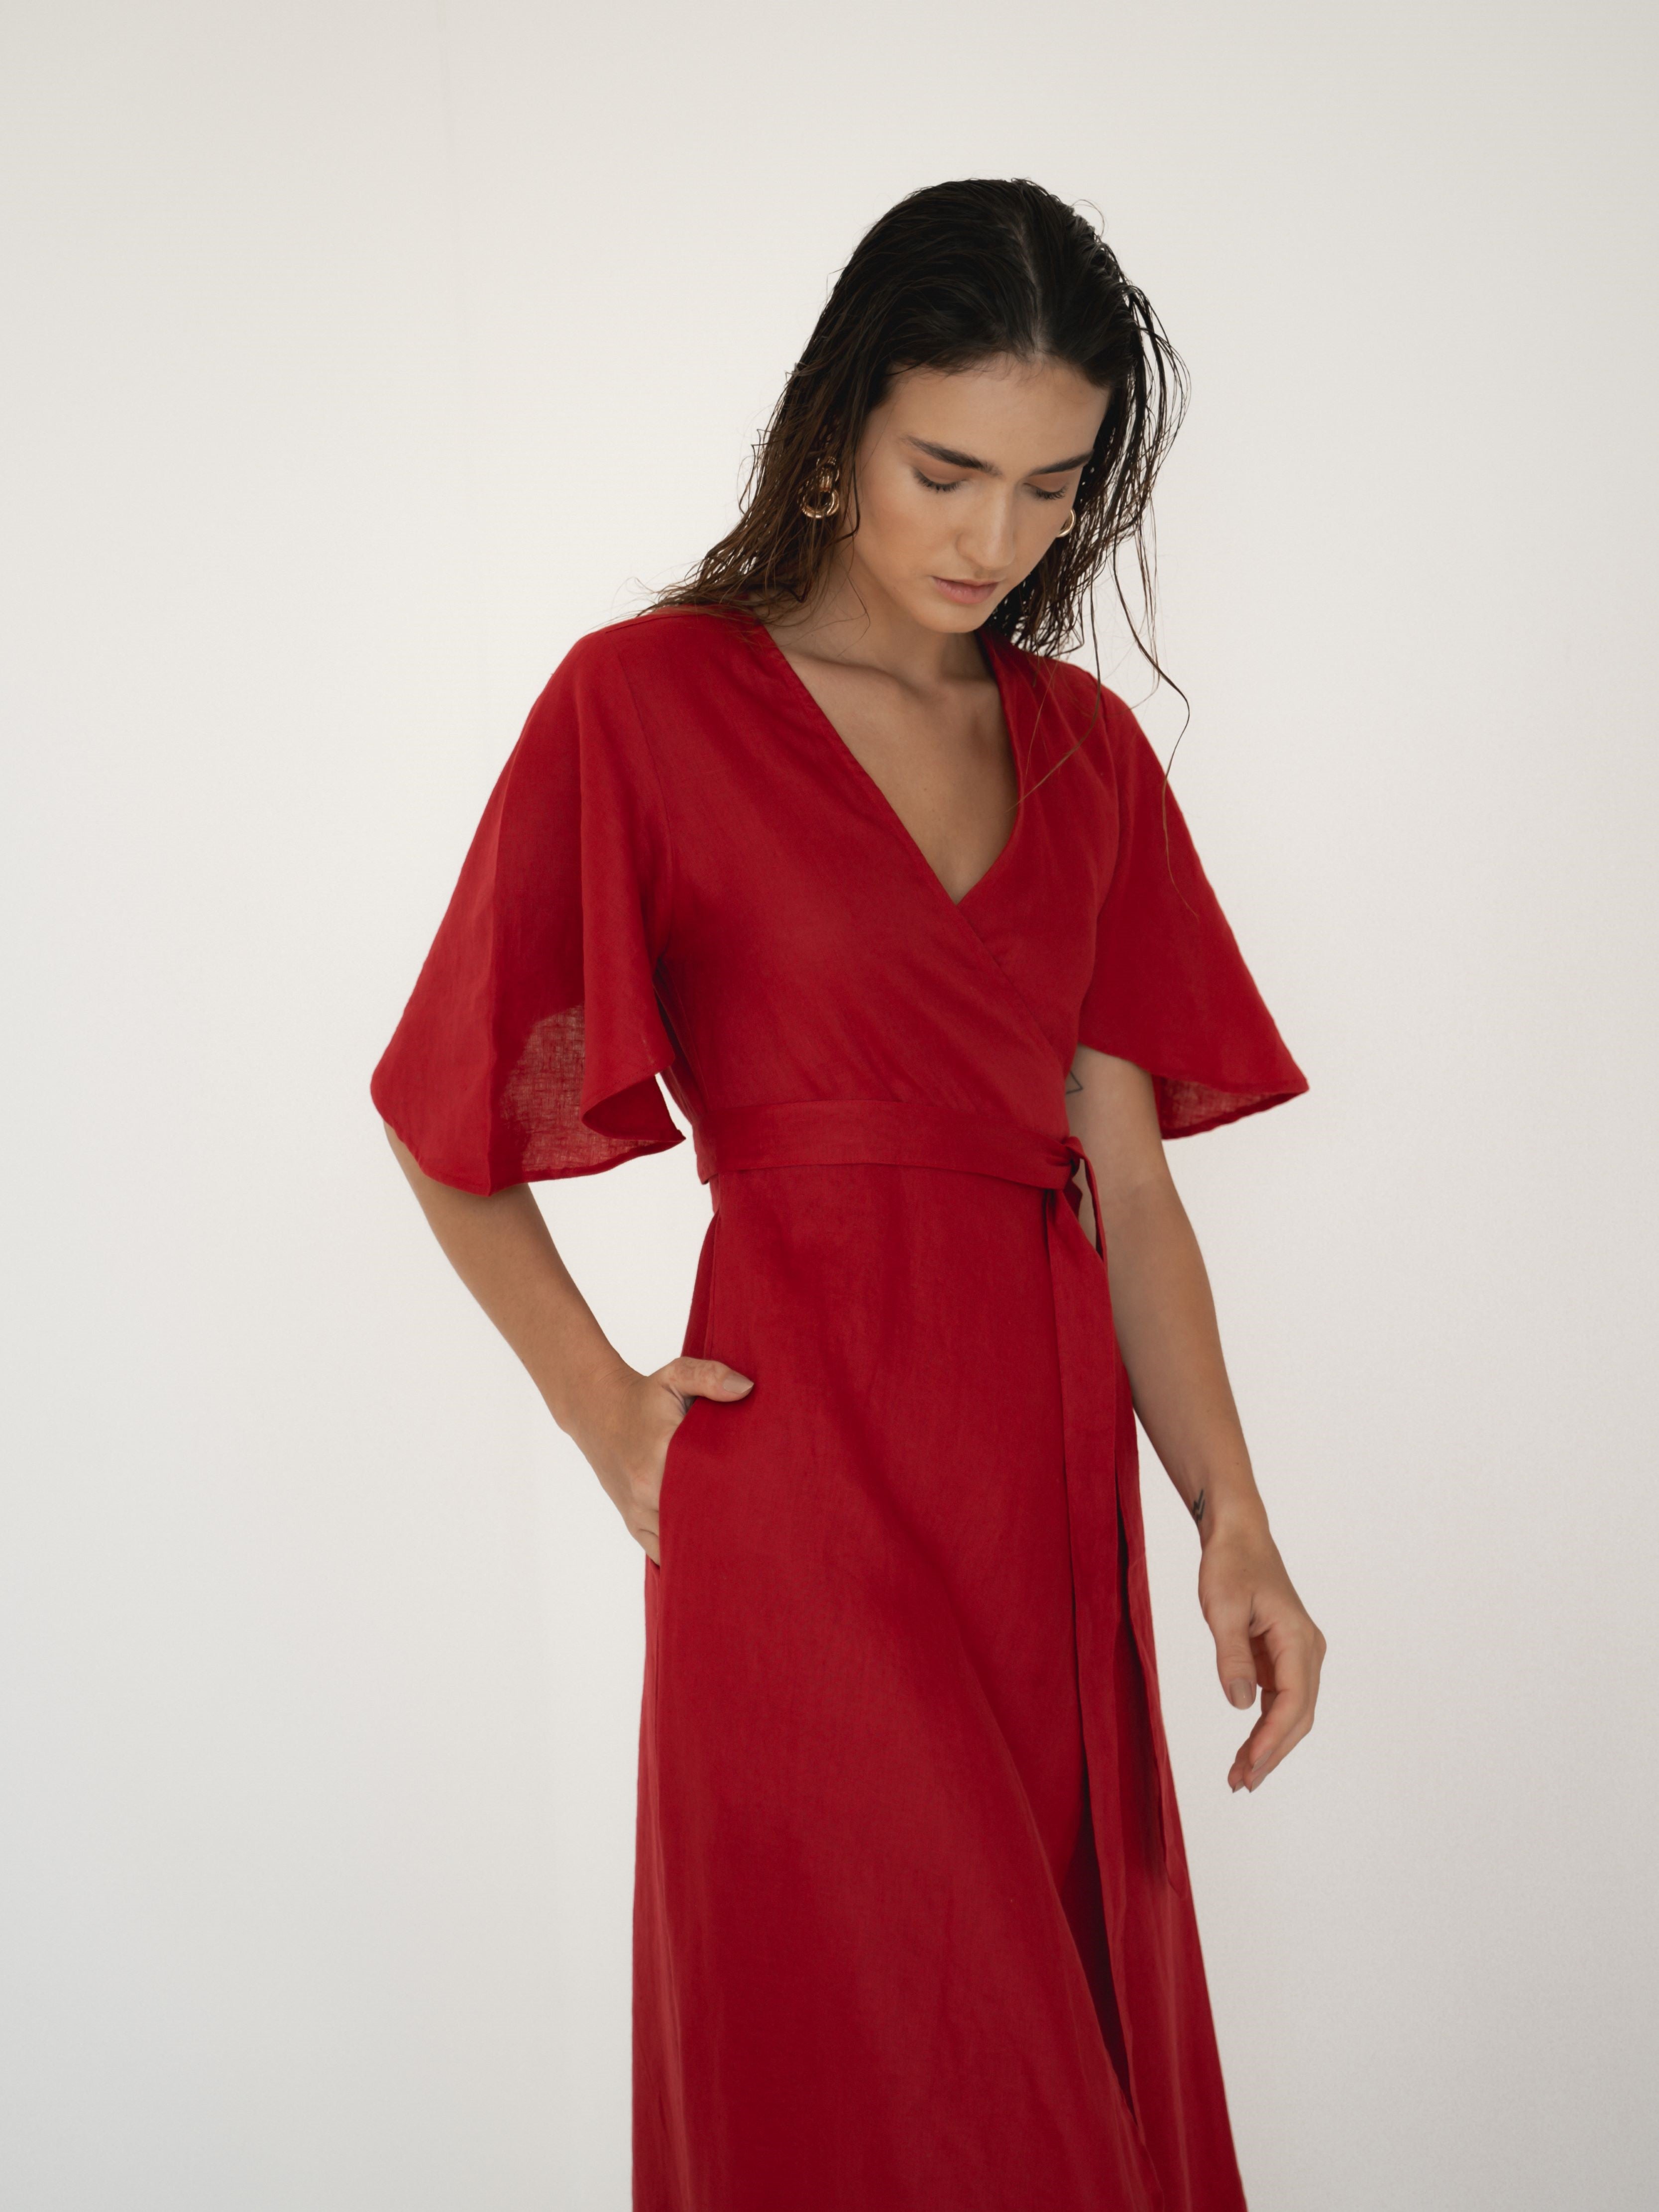 Dhalia Linen Dress in Maroon Red - l u • c i e e